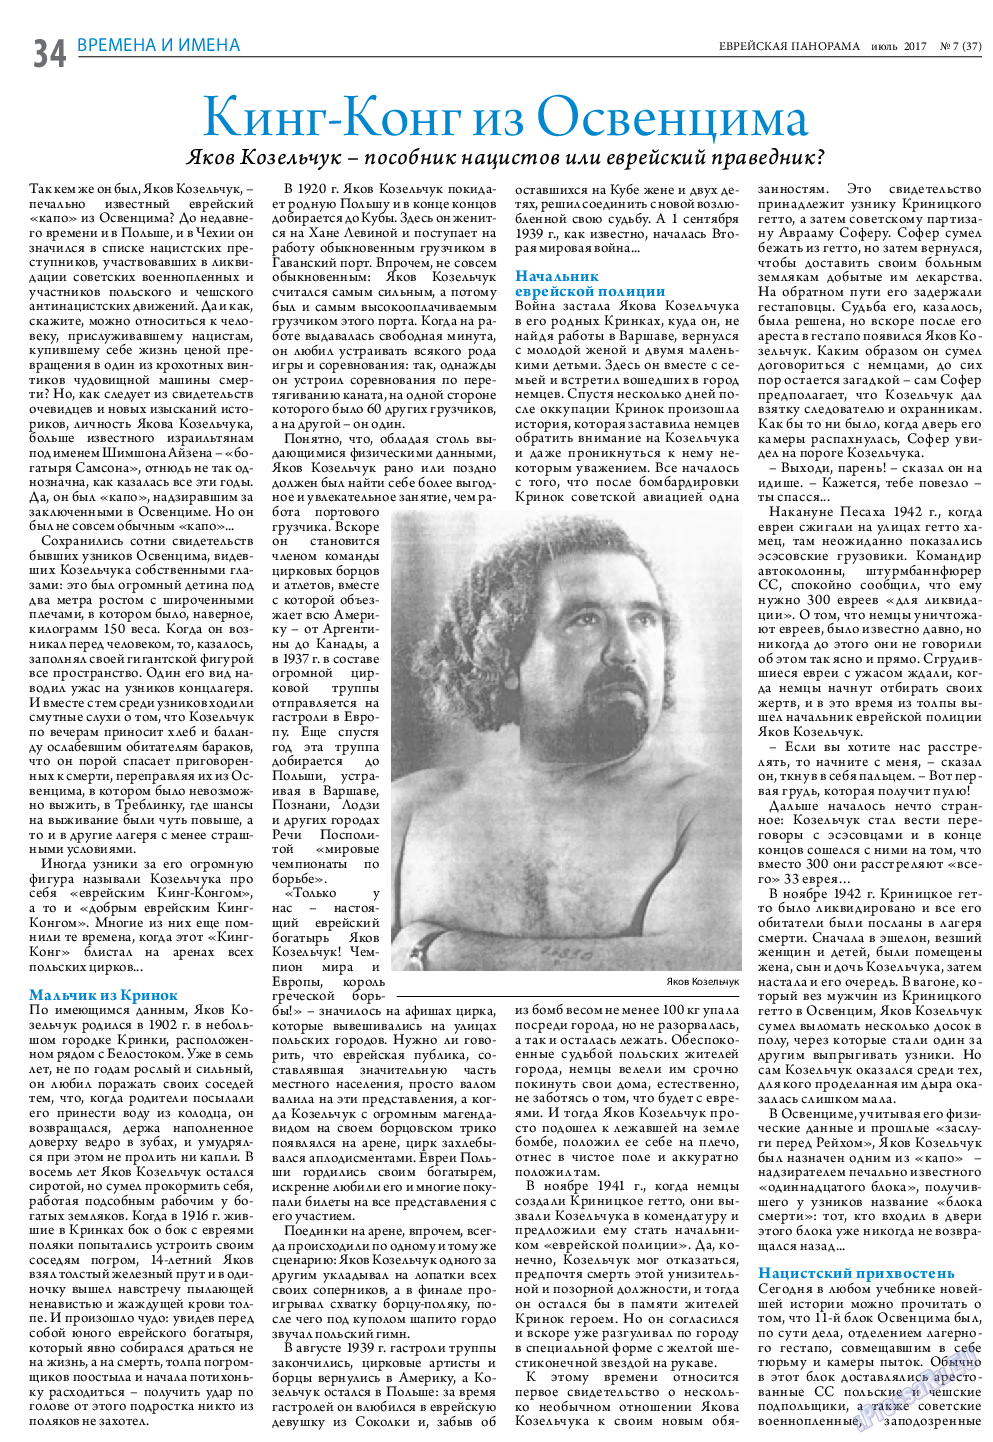 Еврейская панорама, газета. 2017 №7 стр.34